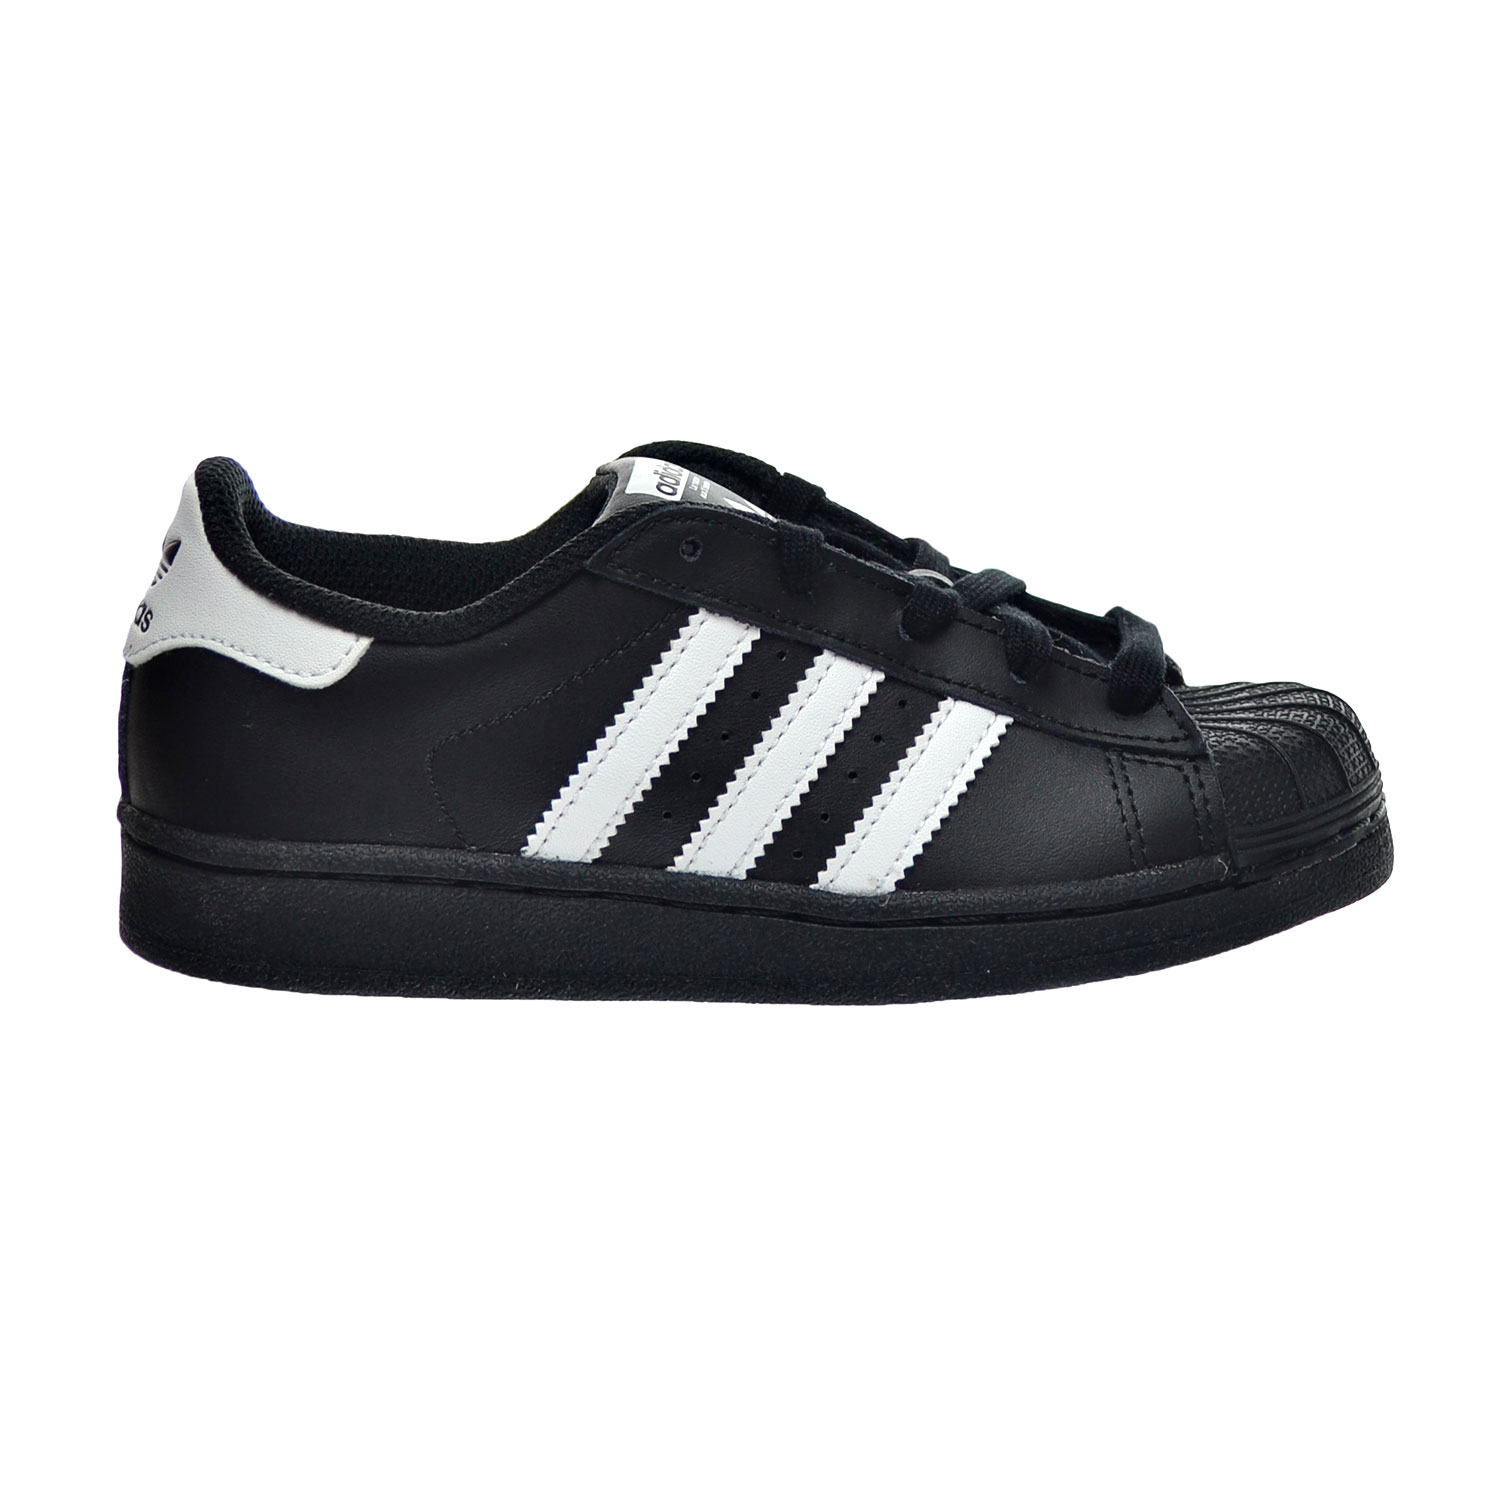 Adidas Superstar C Little Kids Shoes Black/White d70186 | eBay